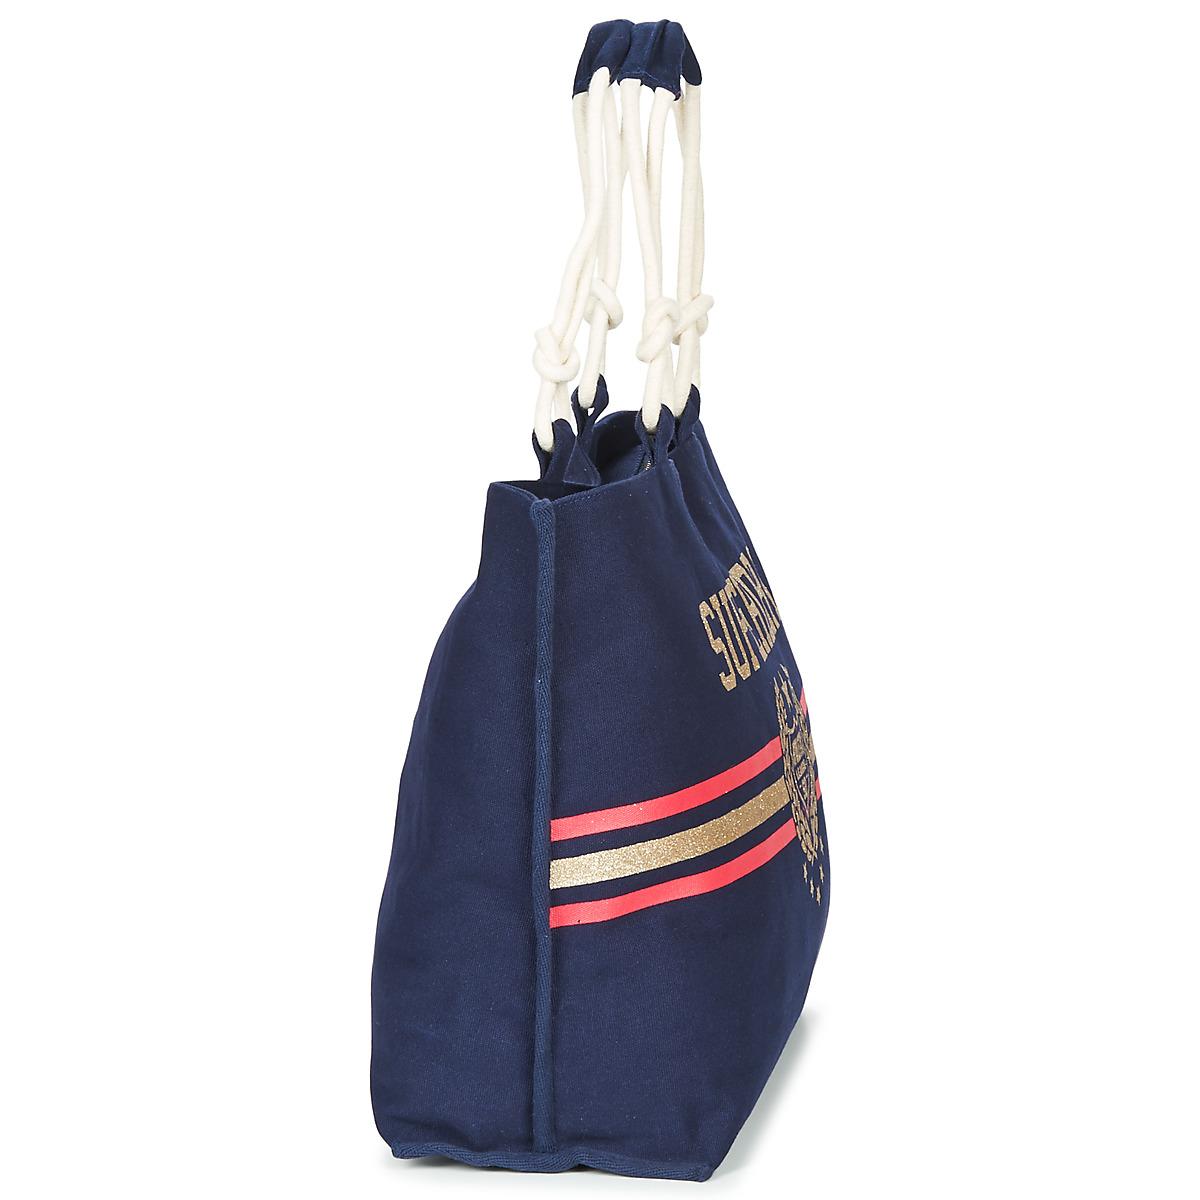 Superdry Amaya Rope Tote Shopper Bag in Blue - Lyst